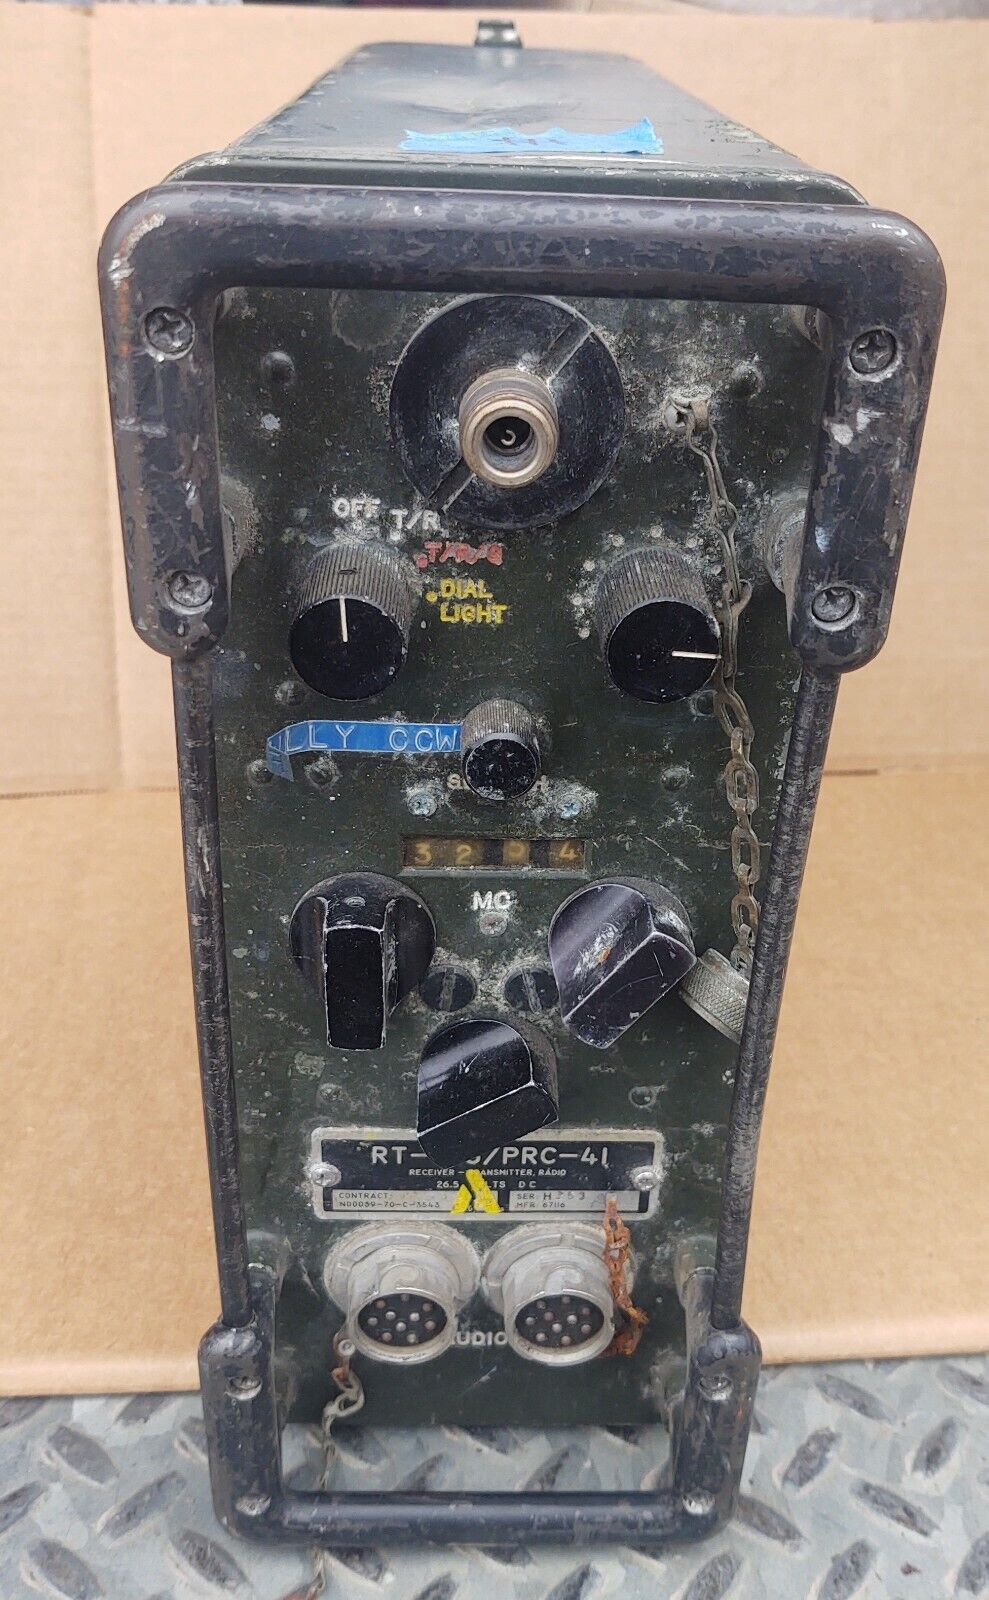 Military Radio RT-695 PRC-41 Receiver Transmitter  #1